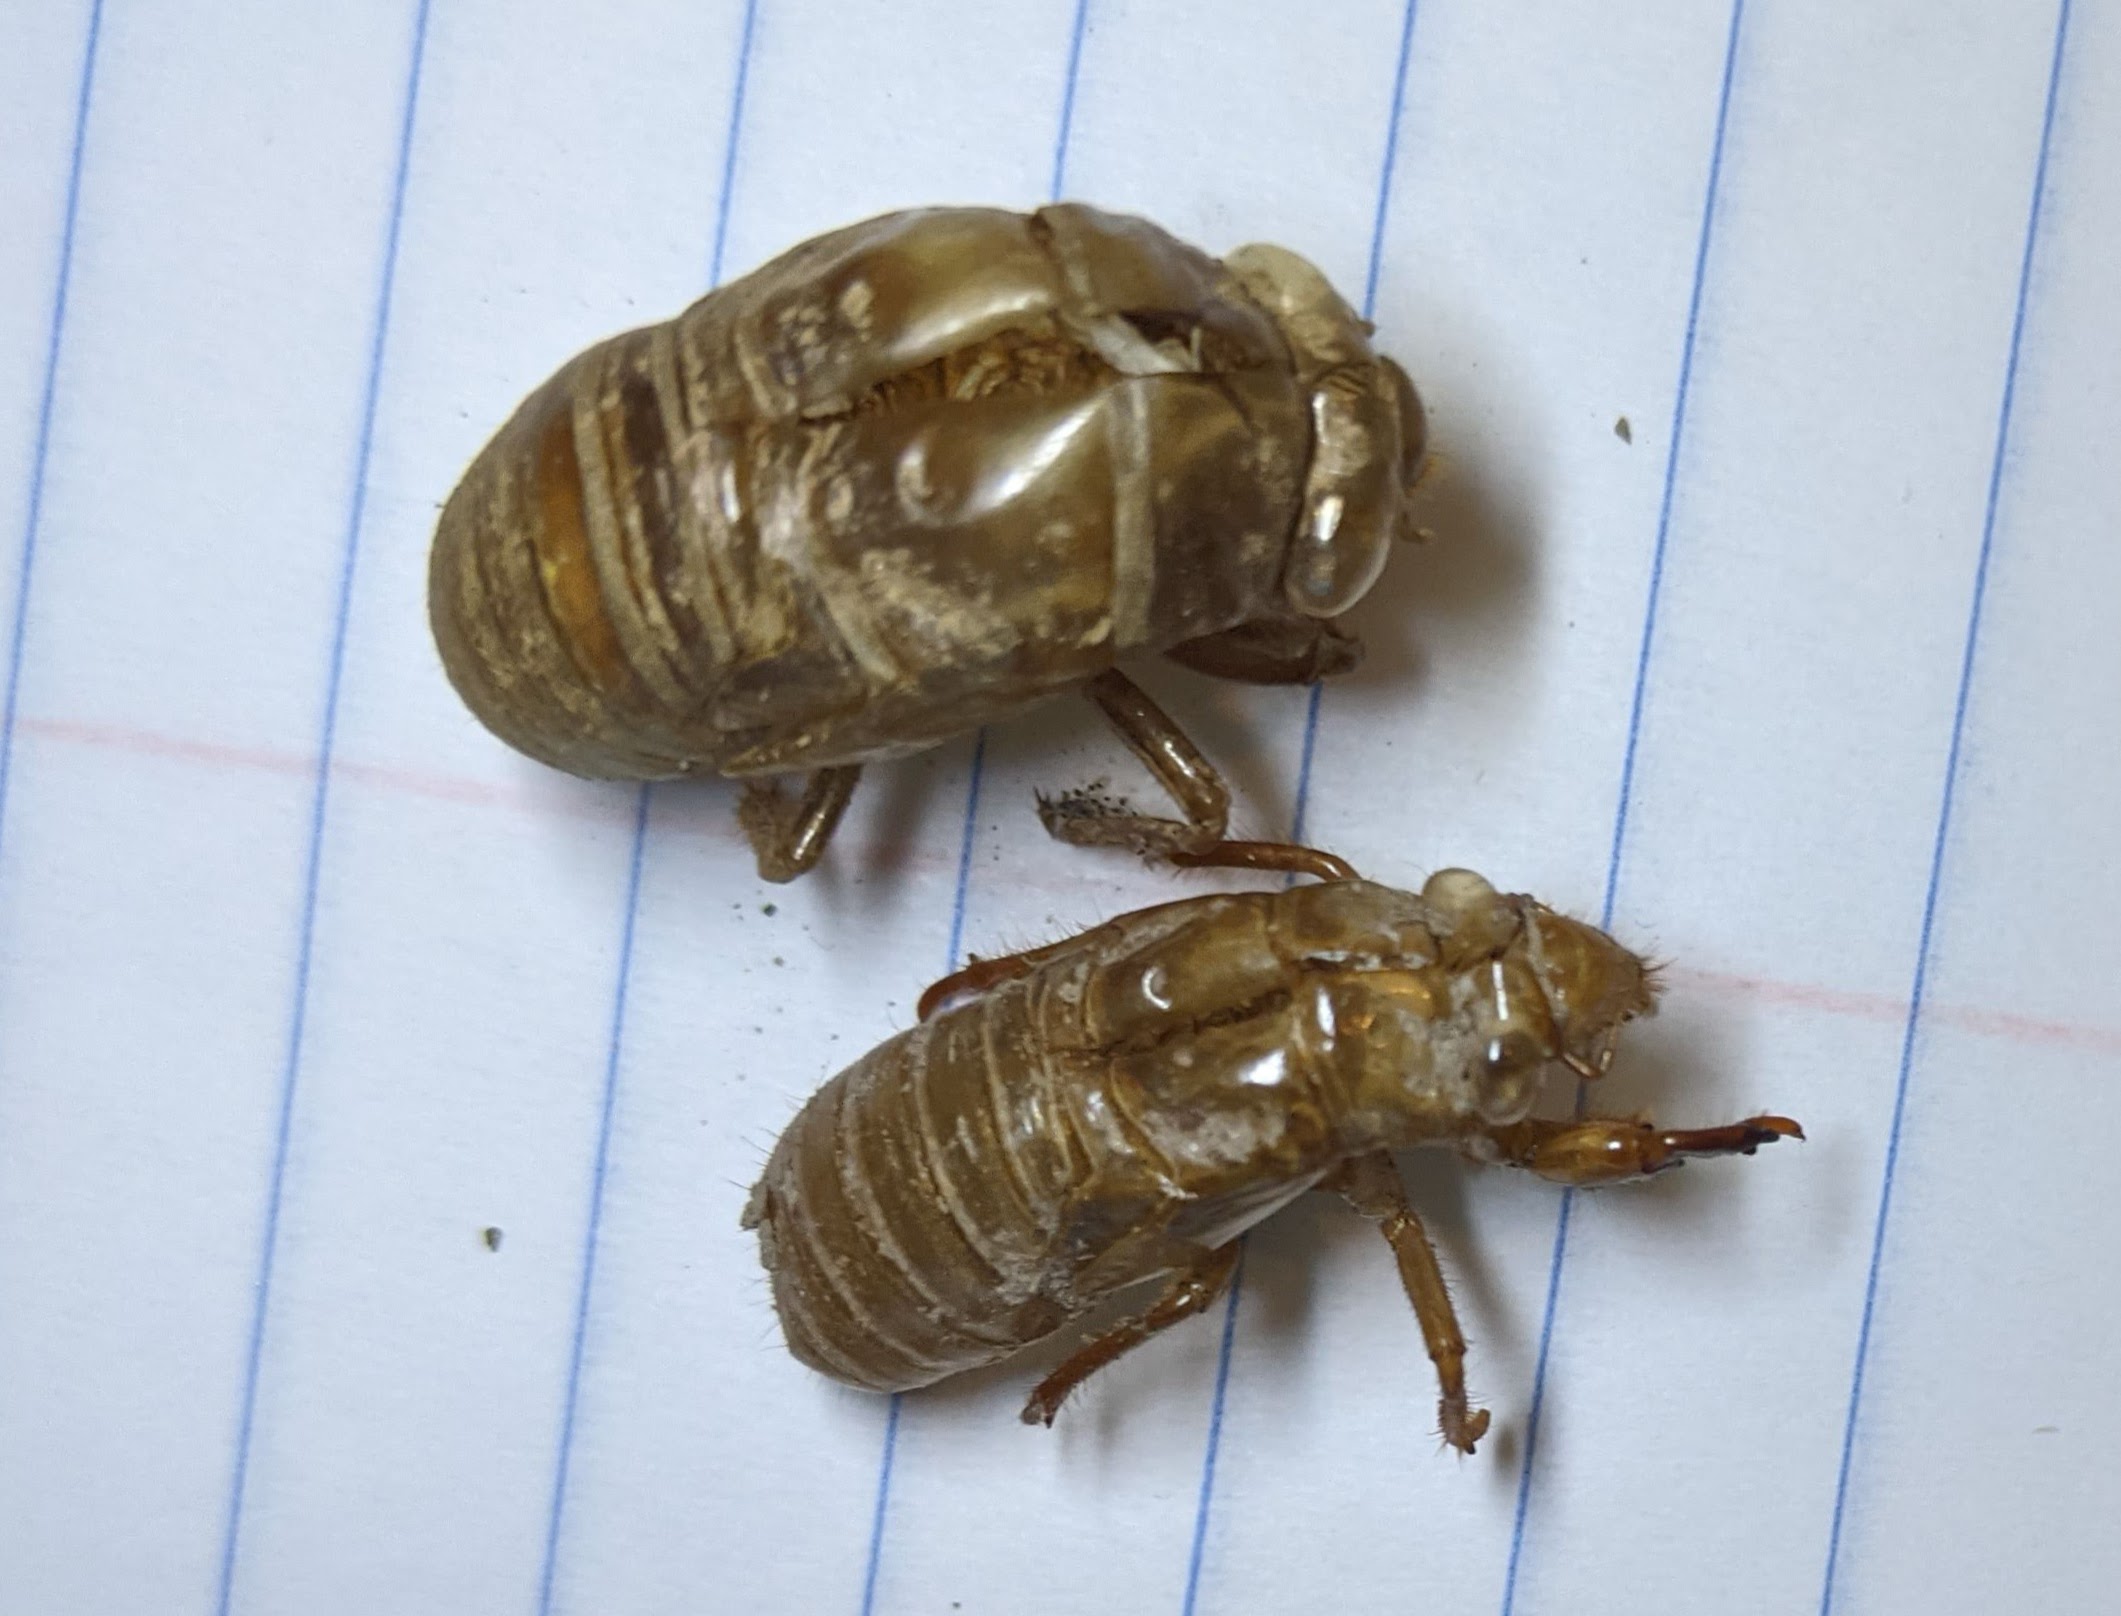 annual cicada exoskeleton compared to periodical cicada on bottom |  Pics4Learning